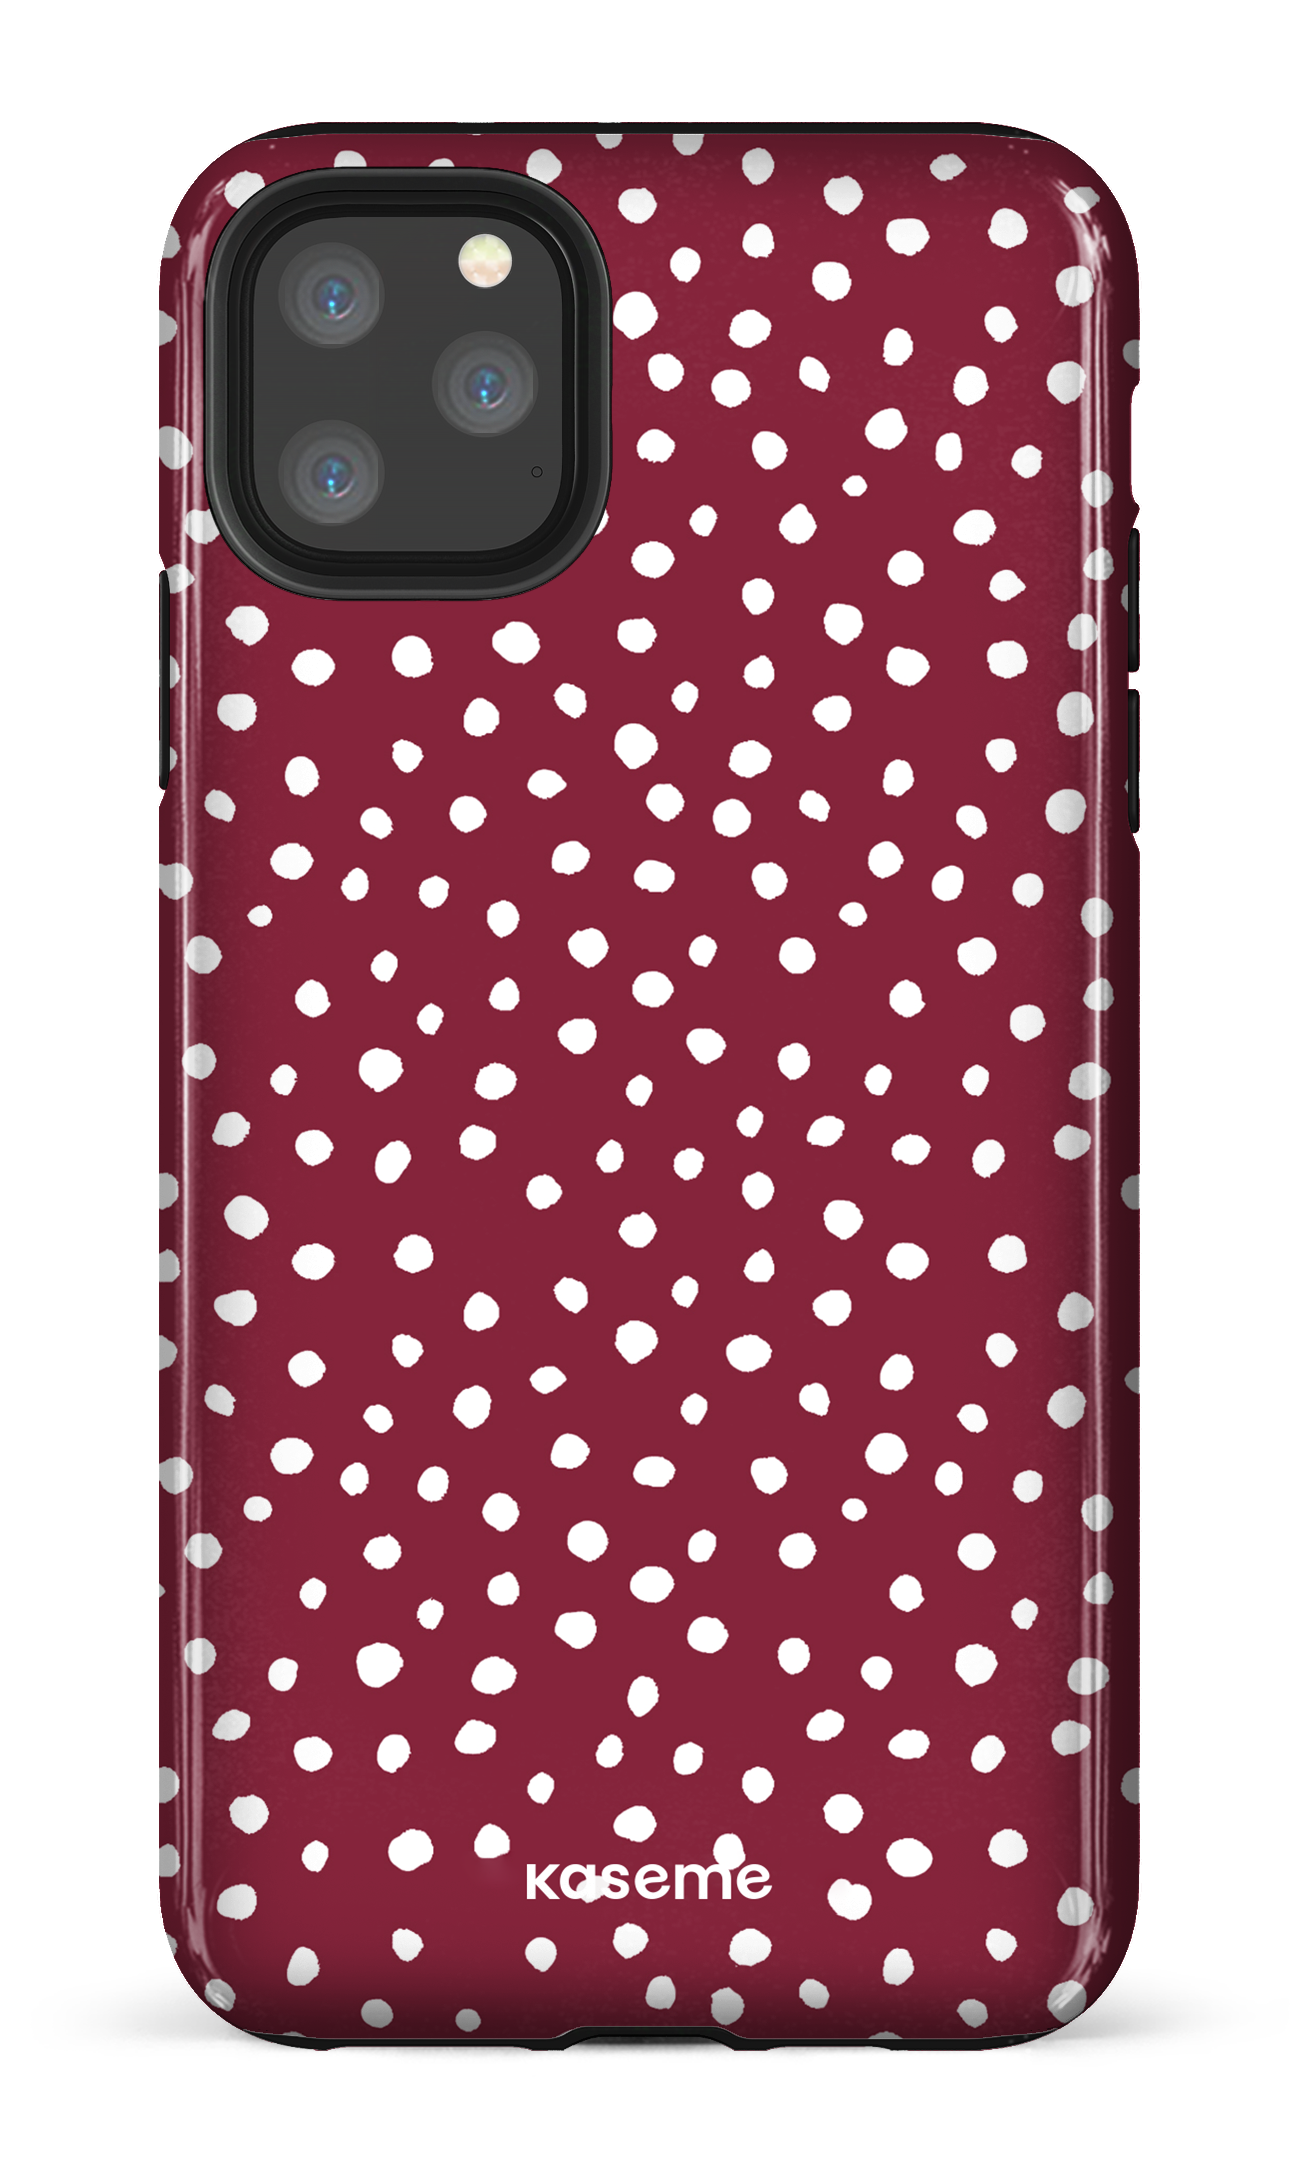 Honey red - iPhone 11 Pro Max